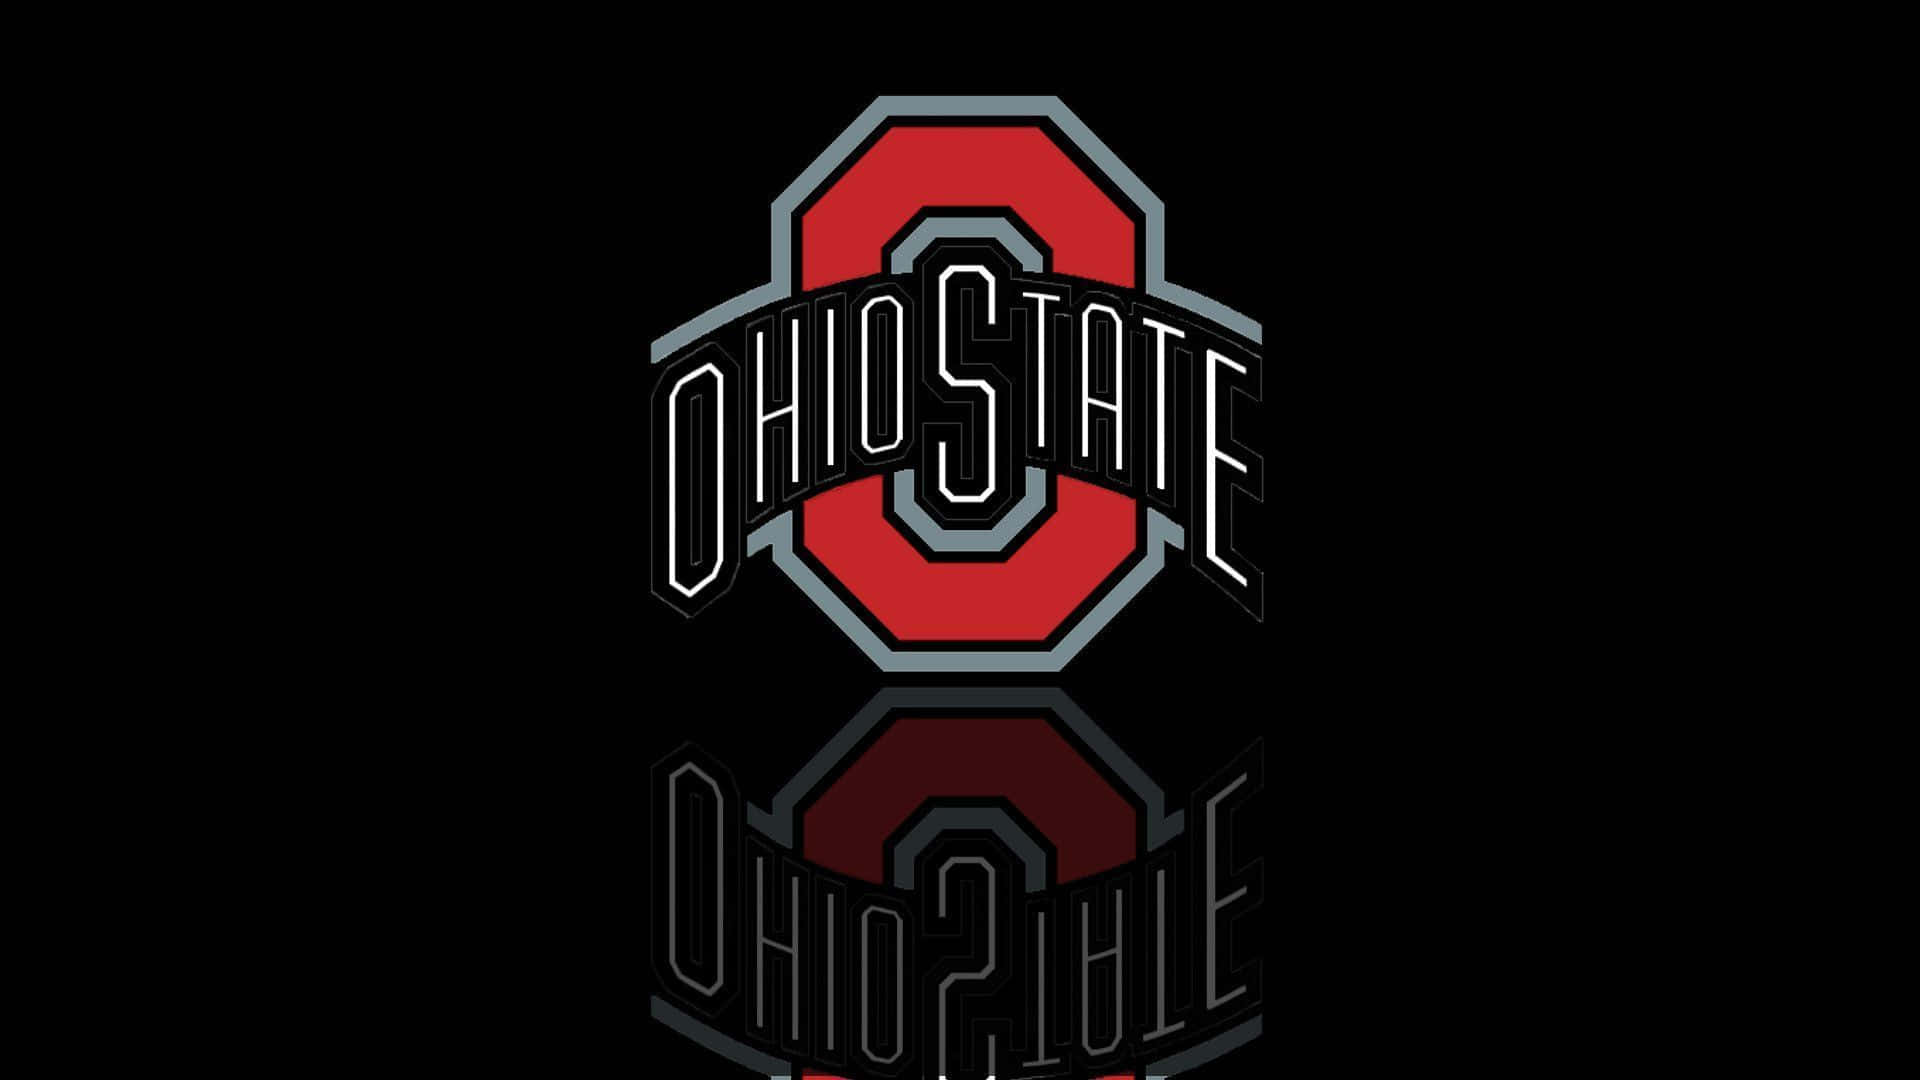 Logotipode Ohio State En Superficie Negra Brillante. Fondo de pantalla